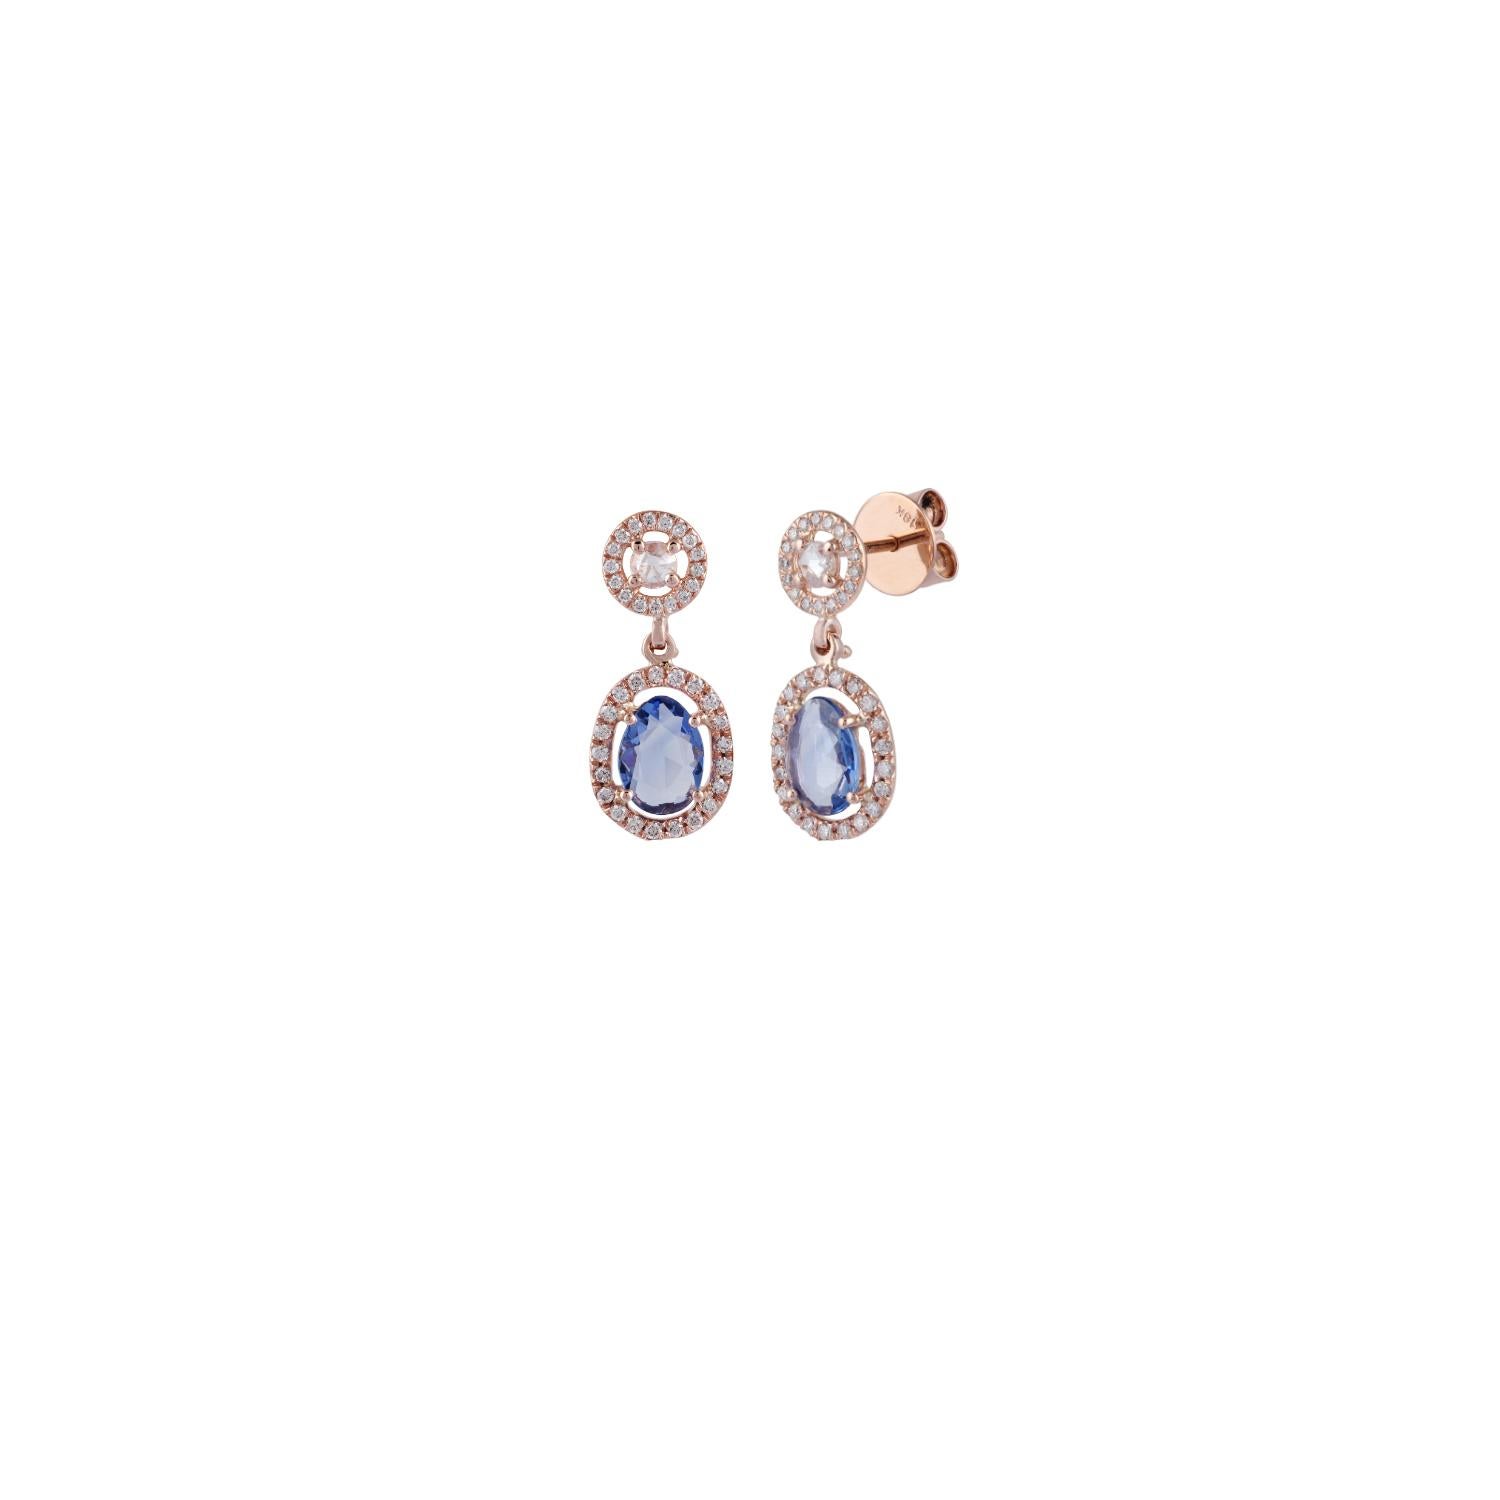 Rose Cut 2.03 Carat Blue Sapphire and Diamond Earring Studded in 18 Karat Rose Gold